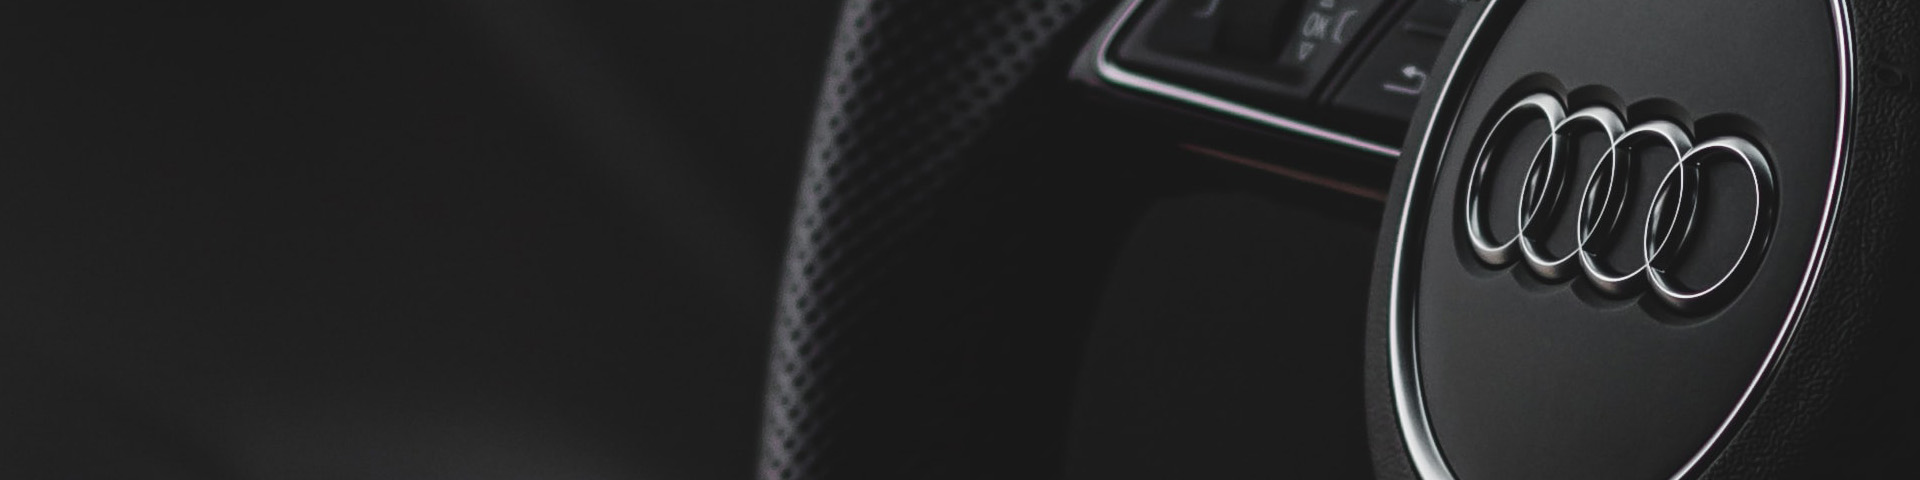 Audi Q7 Backdrop